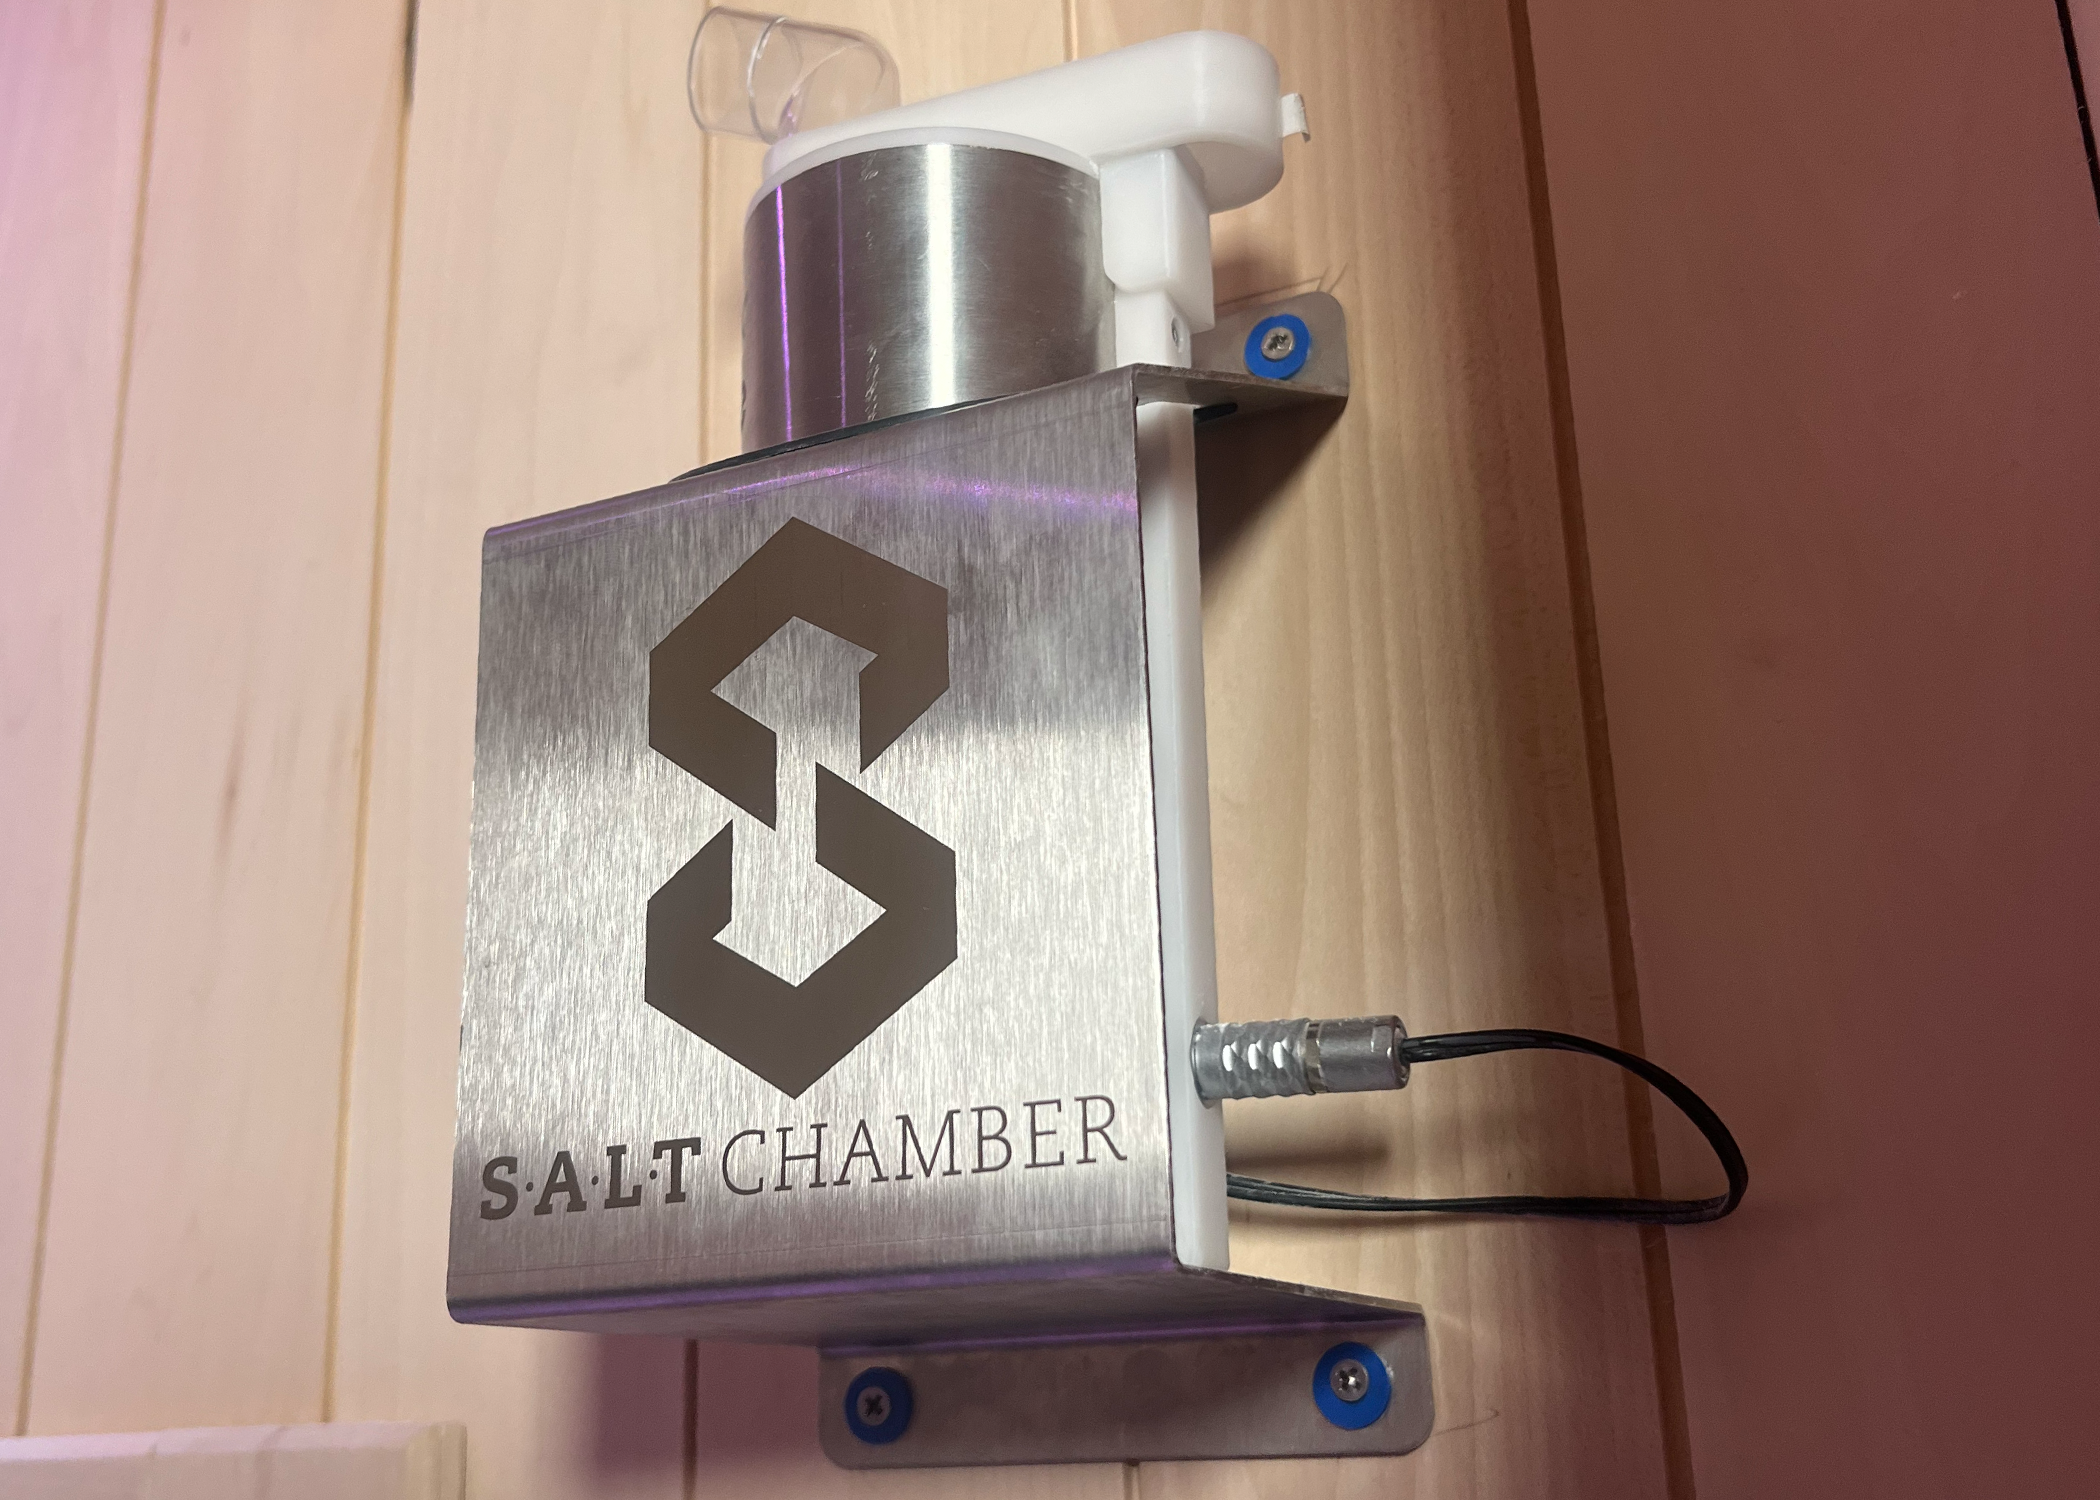 Salt Sauna Conversion Kit - Turn Any Sauna into a Salt Room